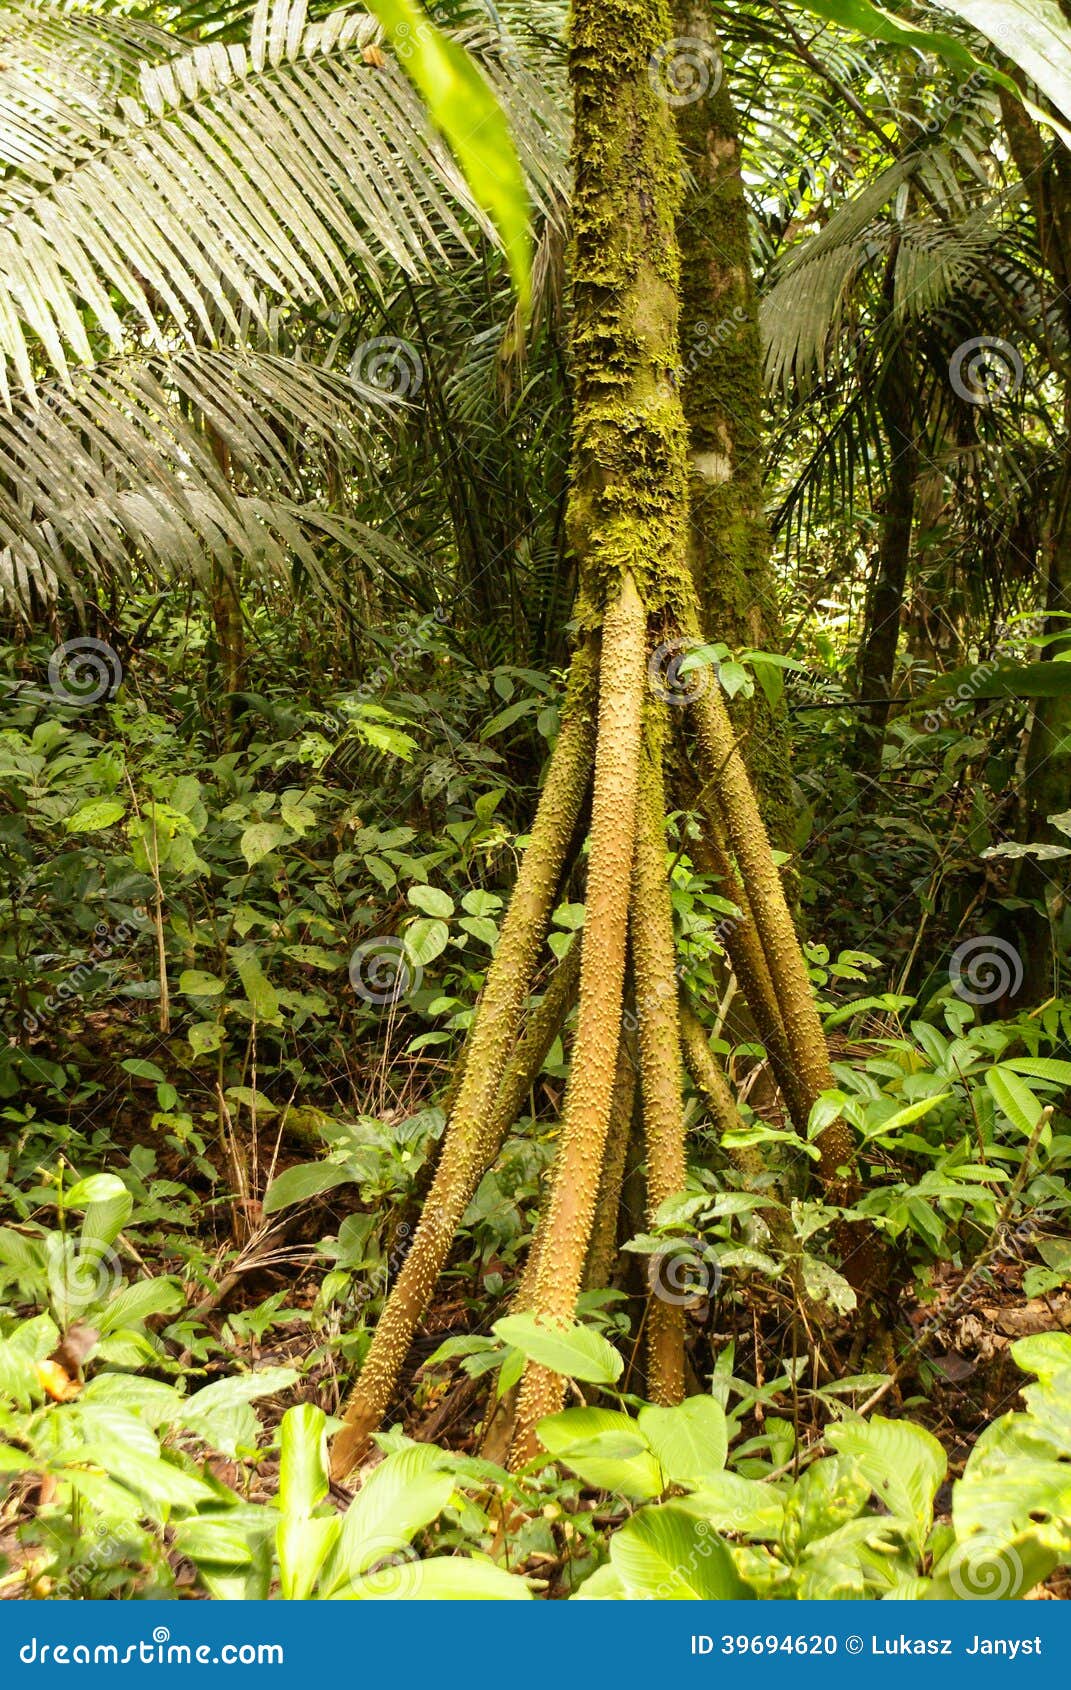 photo stock arbre de jungle d e image